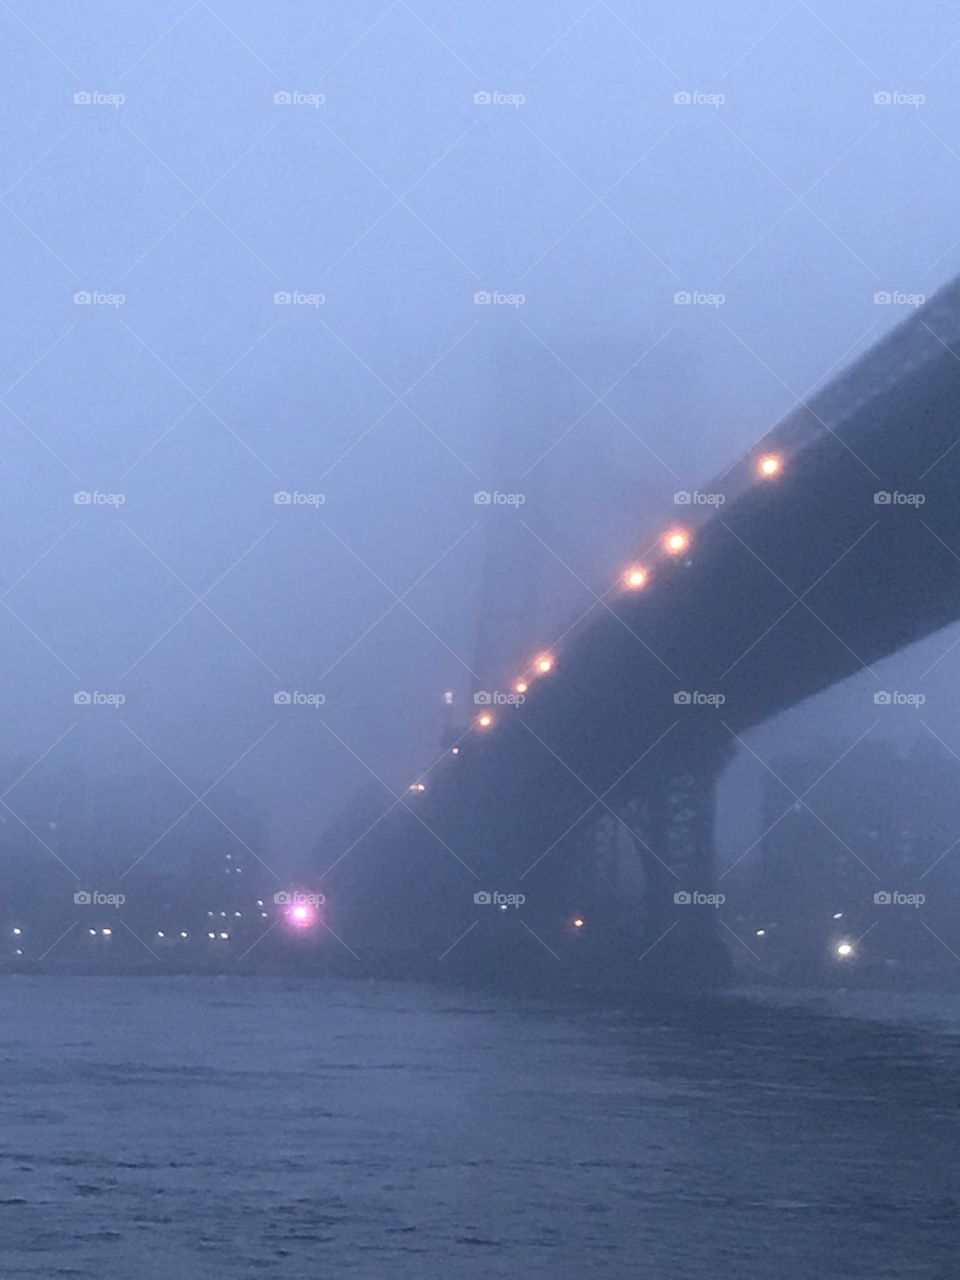 Let it fog, Williamsburg Bridge NYC